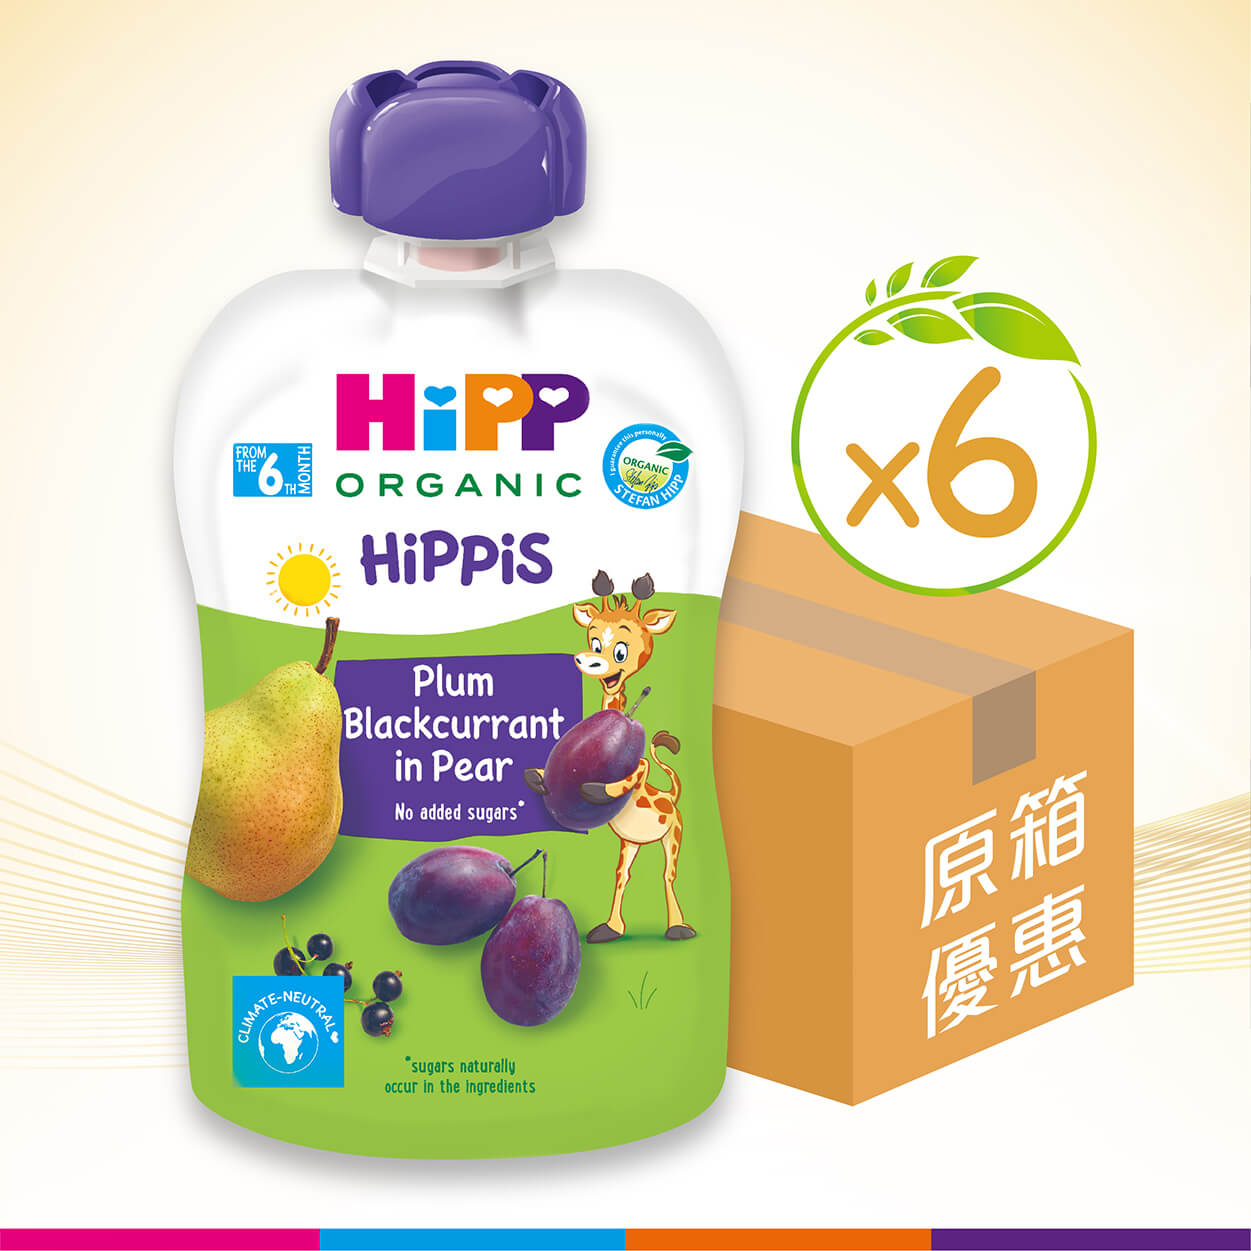 hipp-organic-plum-blackcurrant-in-pear-100g-6-pcs